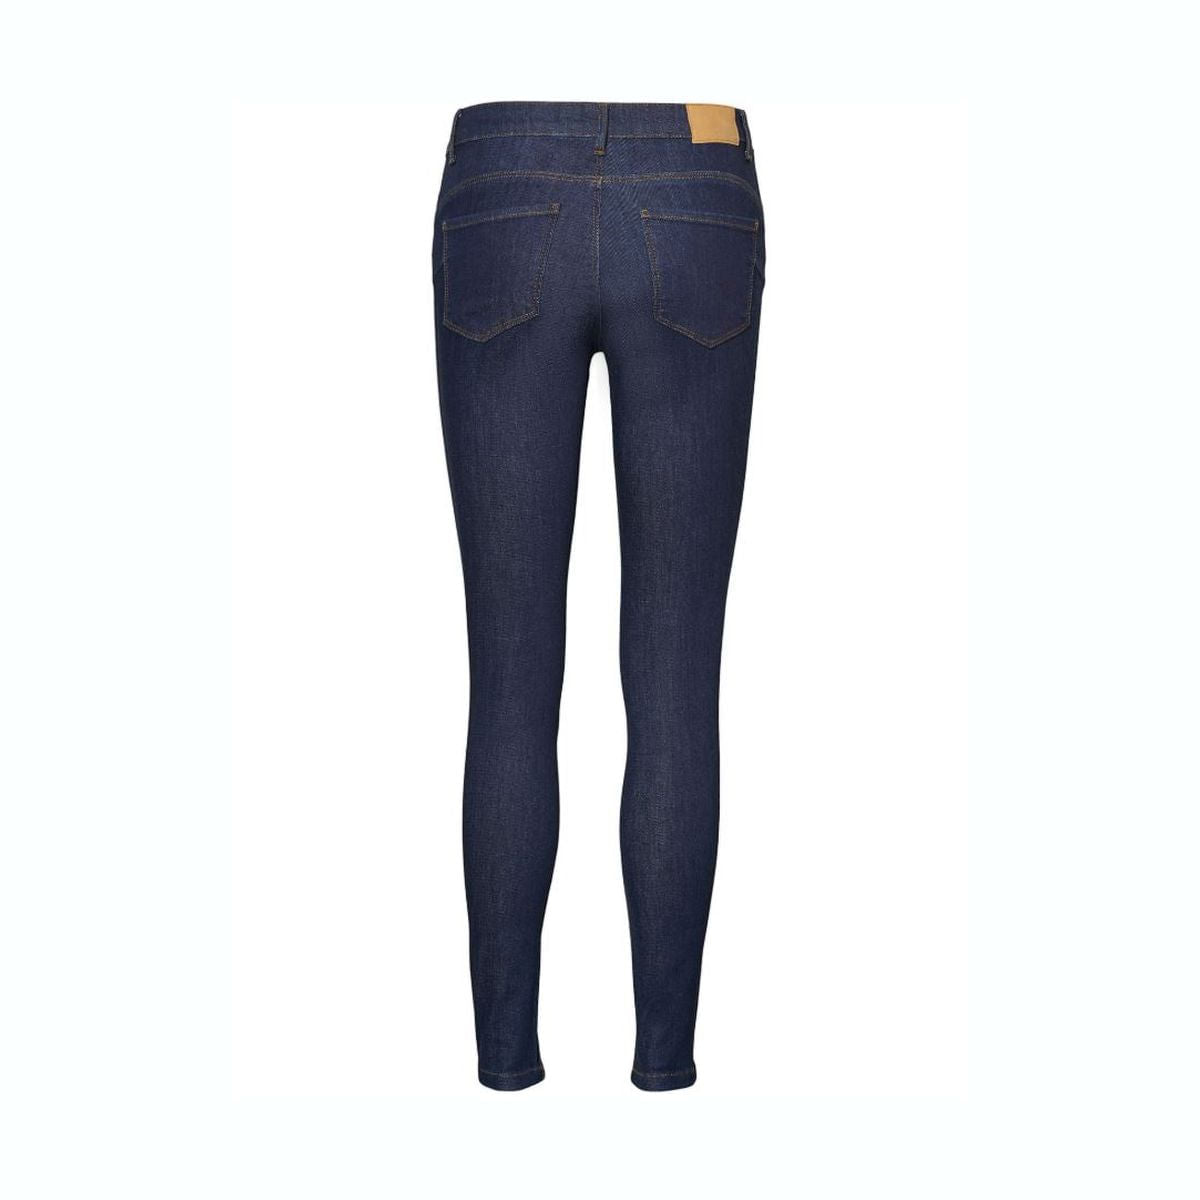 Pantalón Jeans Ajustado para Dama-10183948